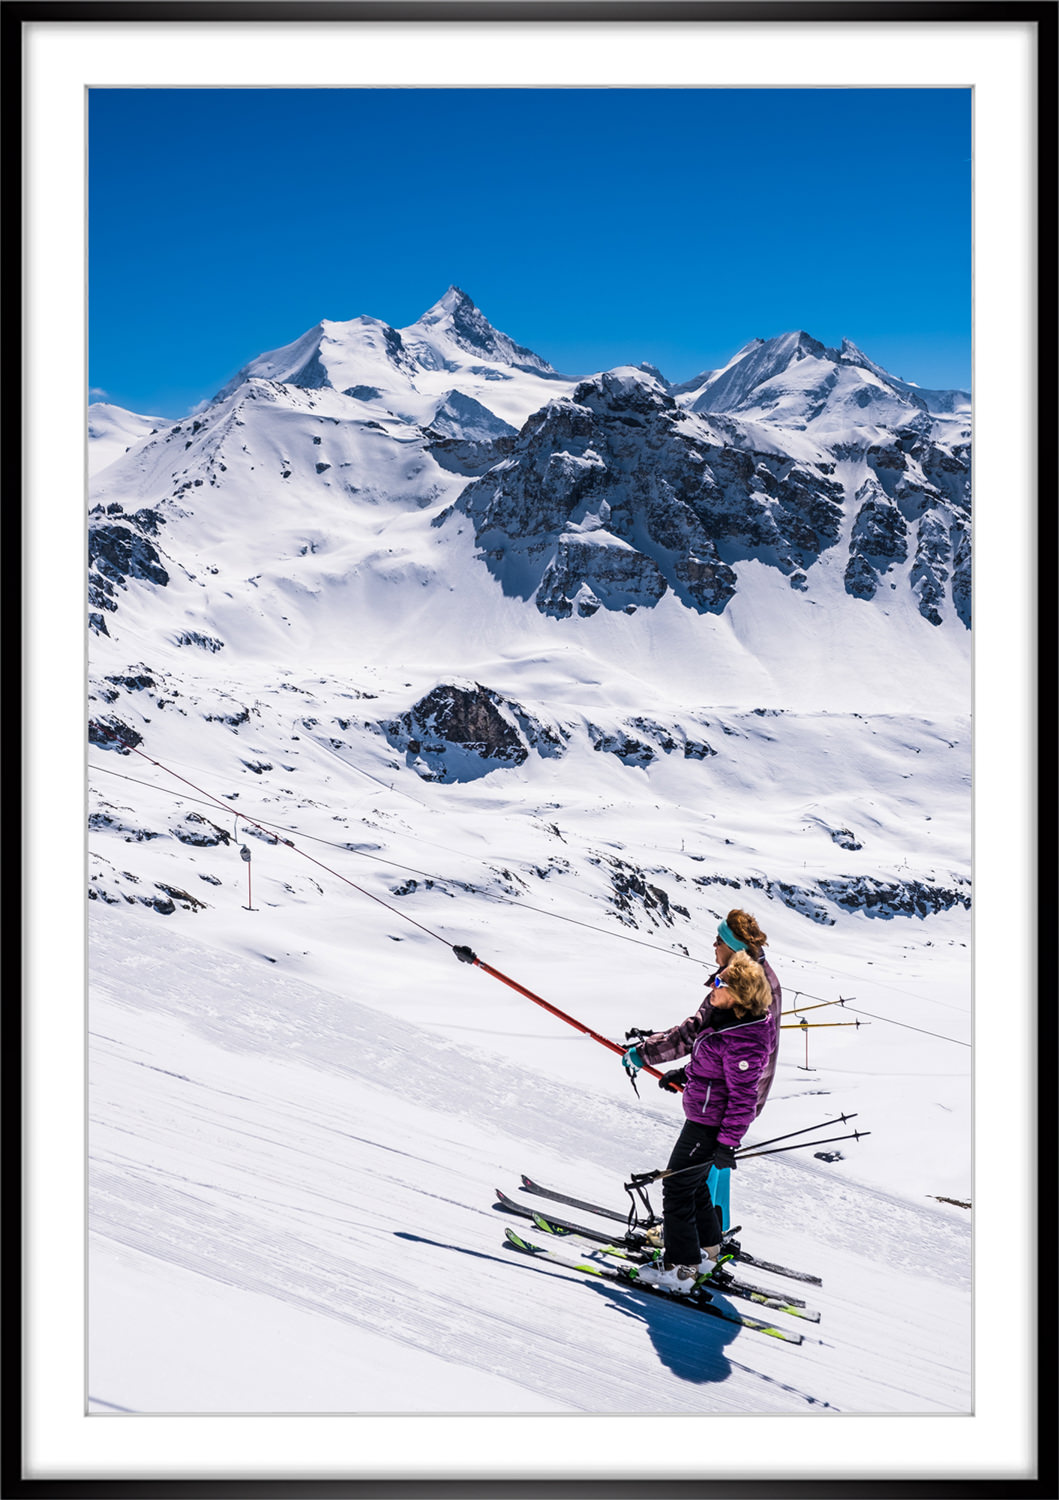 Spring time skiing in St-Luc/Chandolin ski resort,Valais-Wallis, Swiss Alps